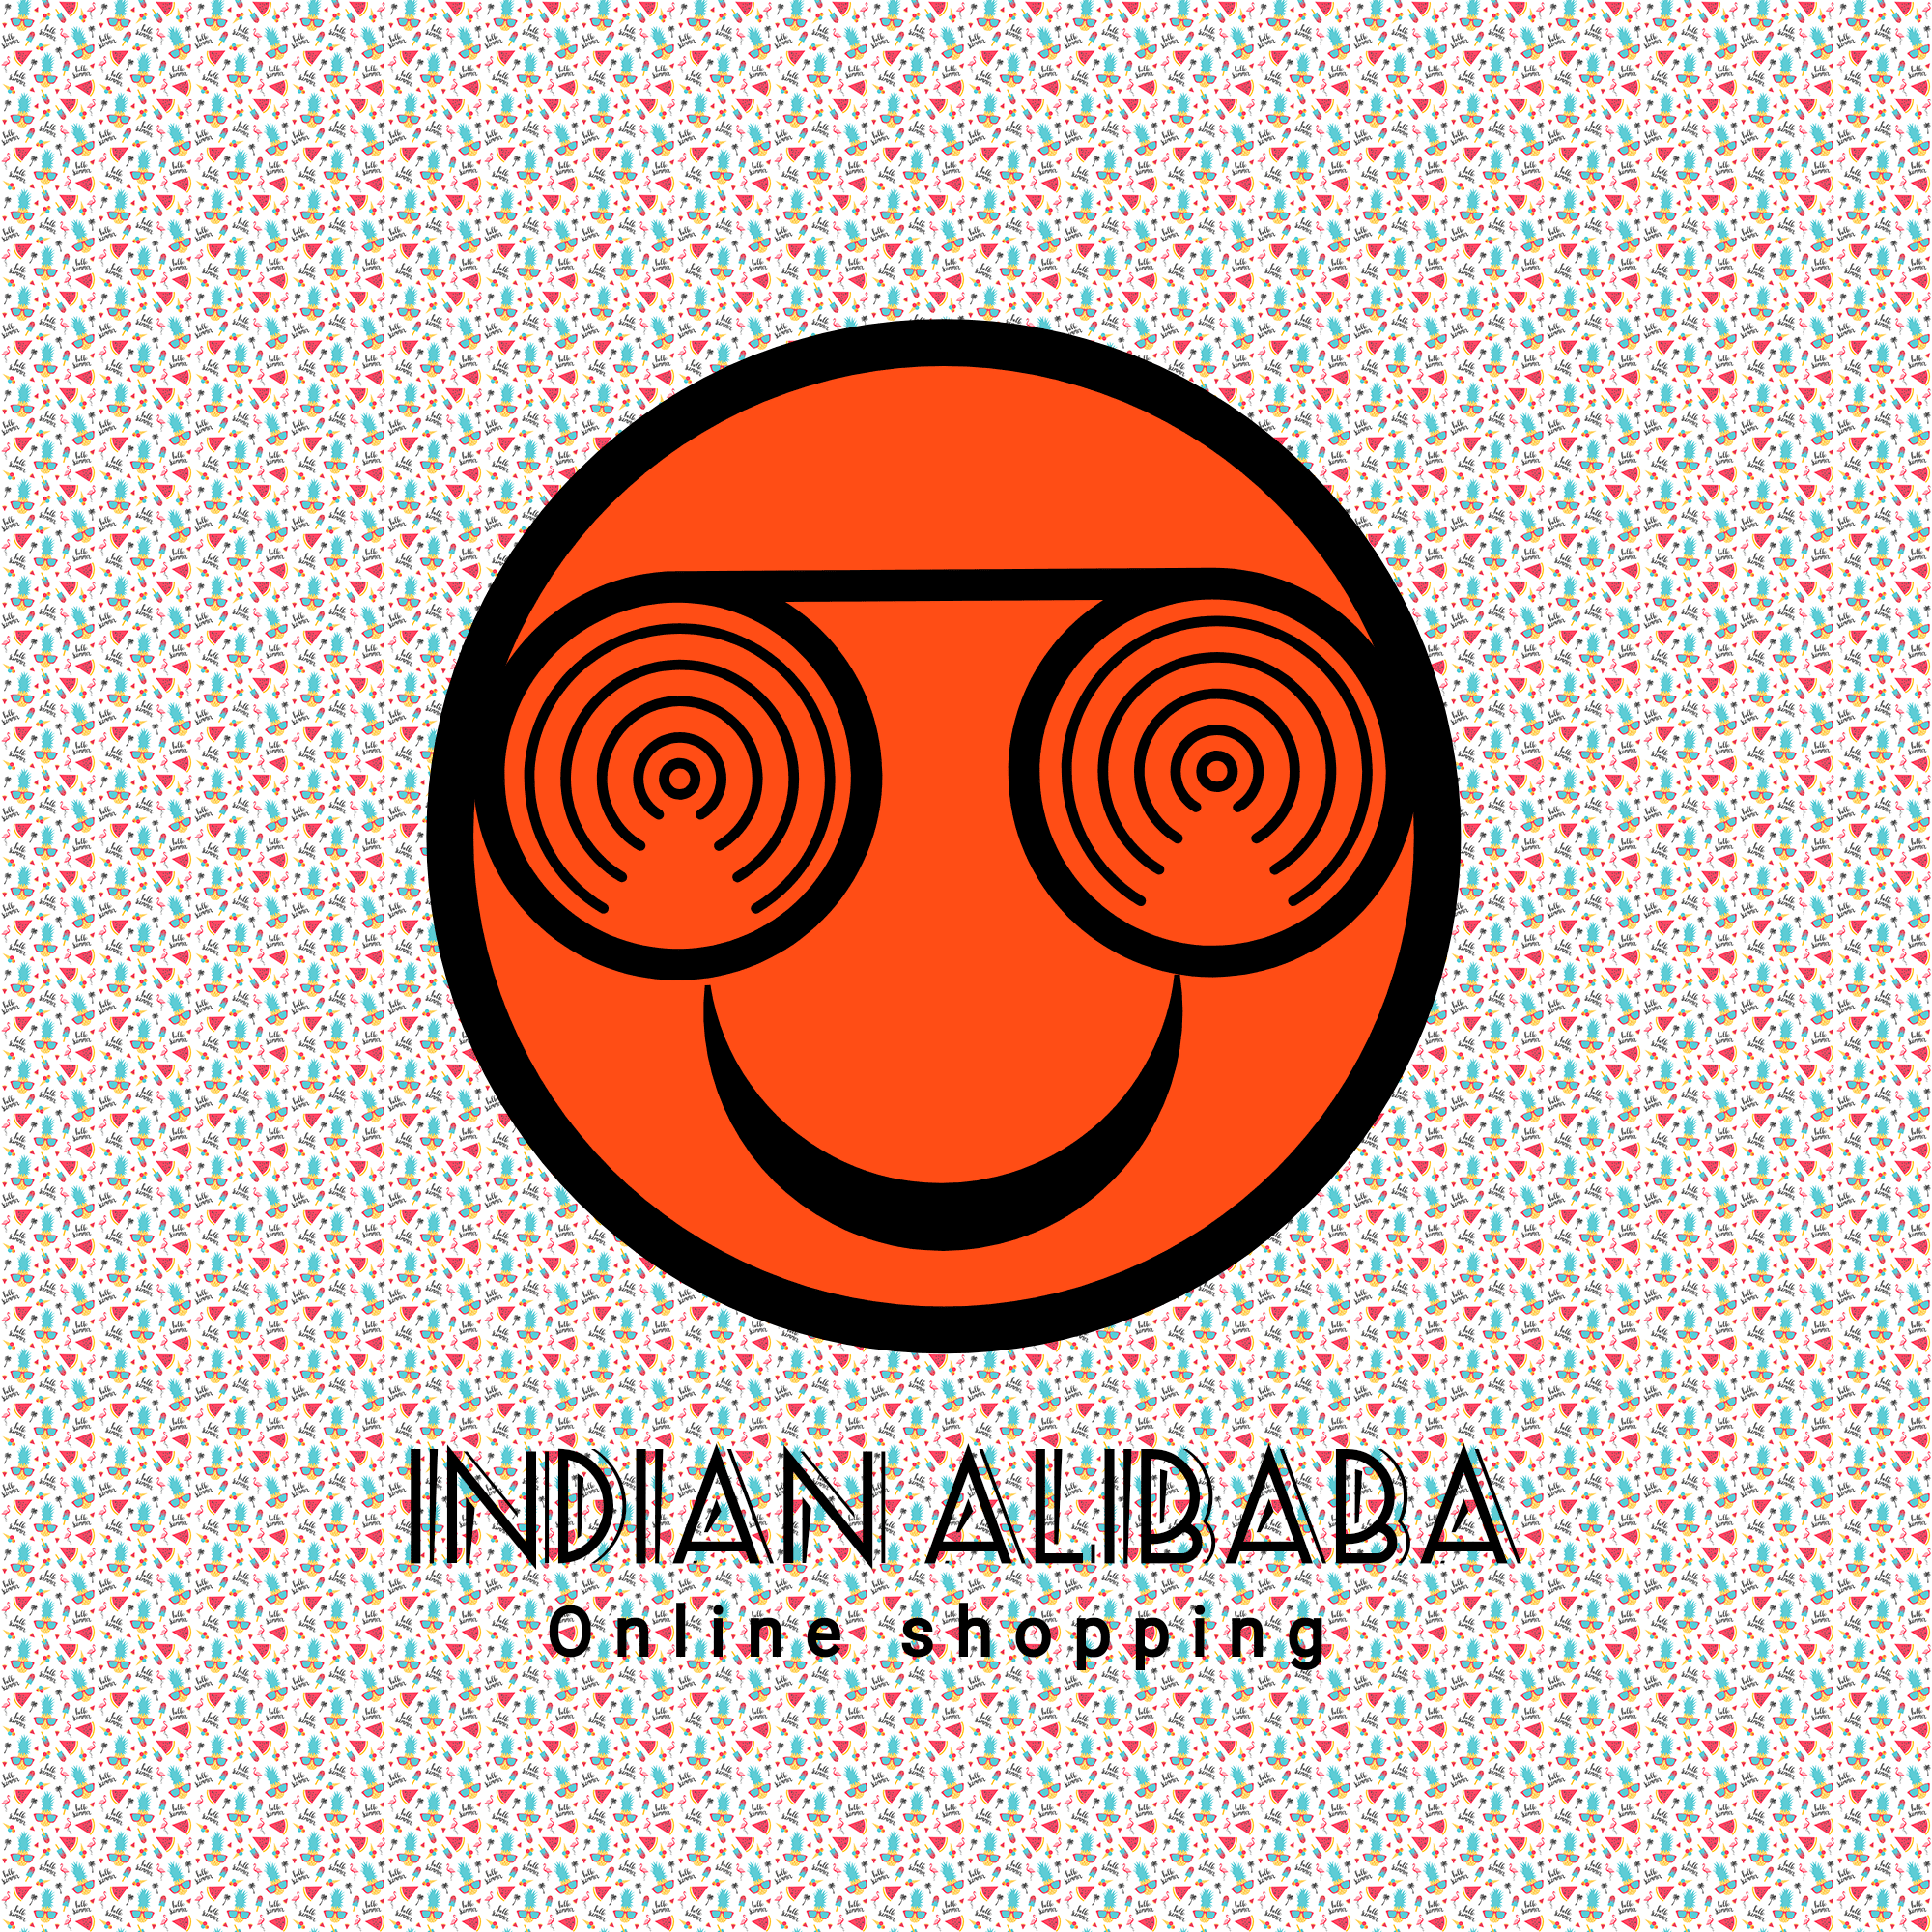 Indian Alibaba